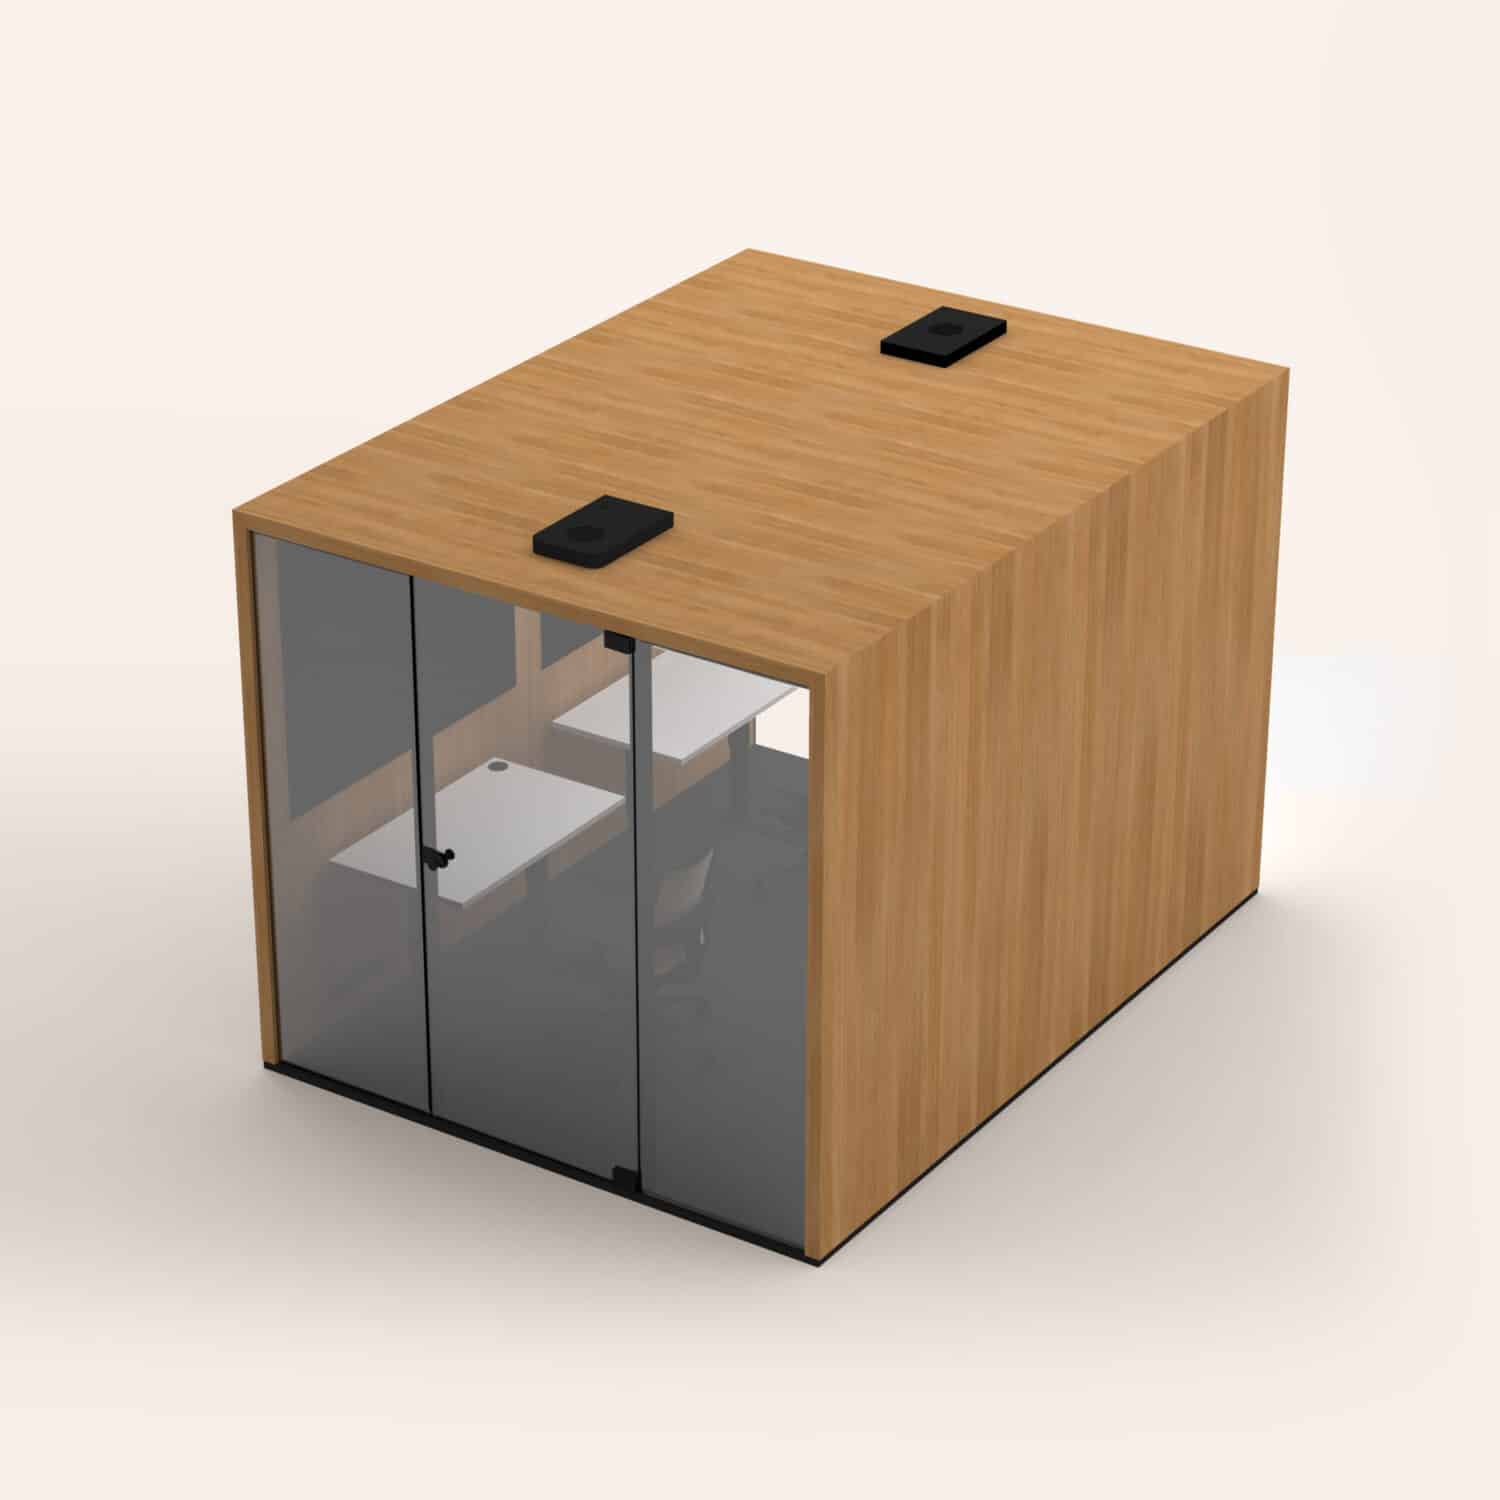 Taiga-Concept-Lohko-Box-7-image1-scaled